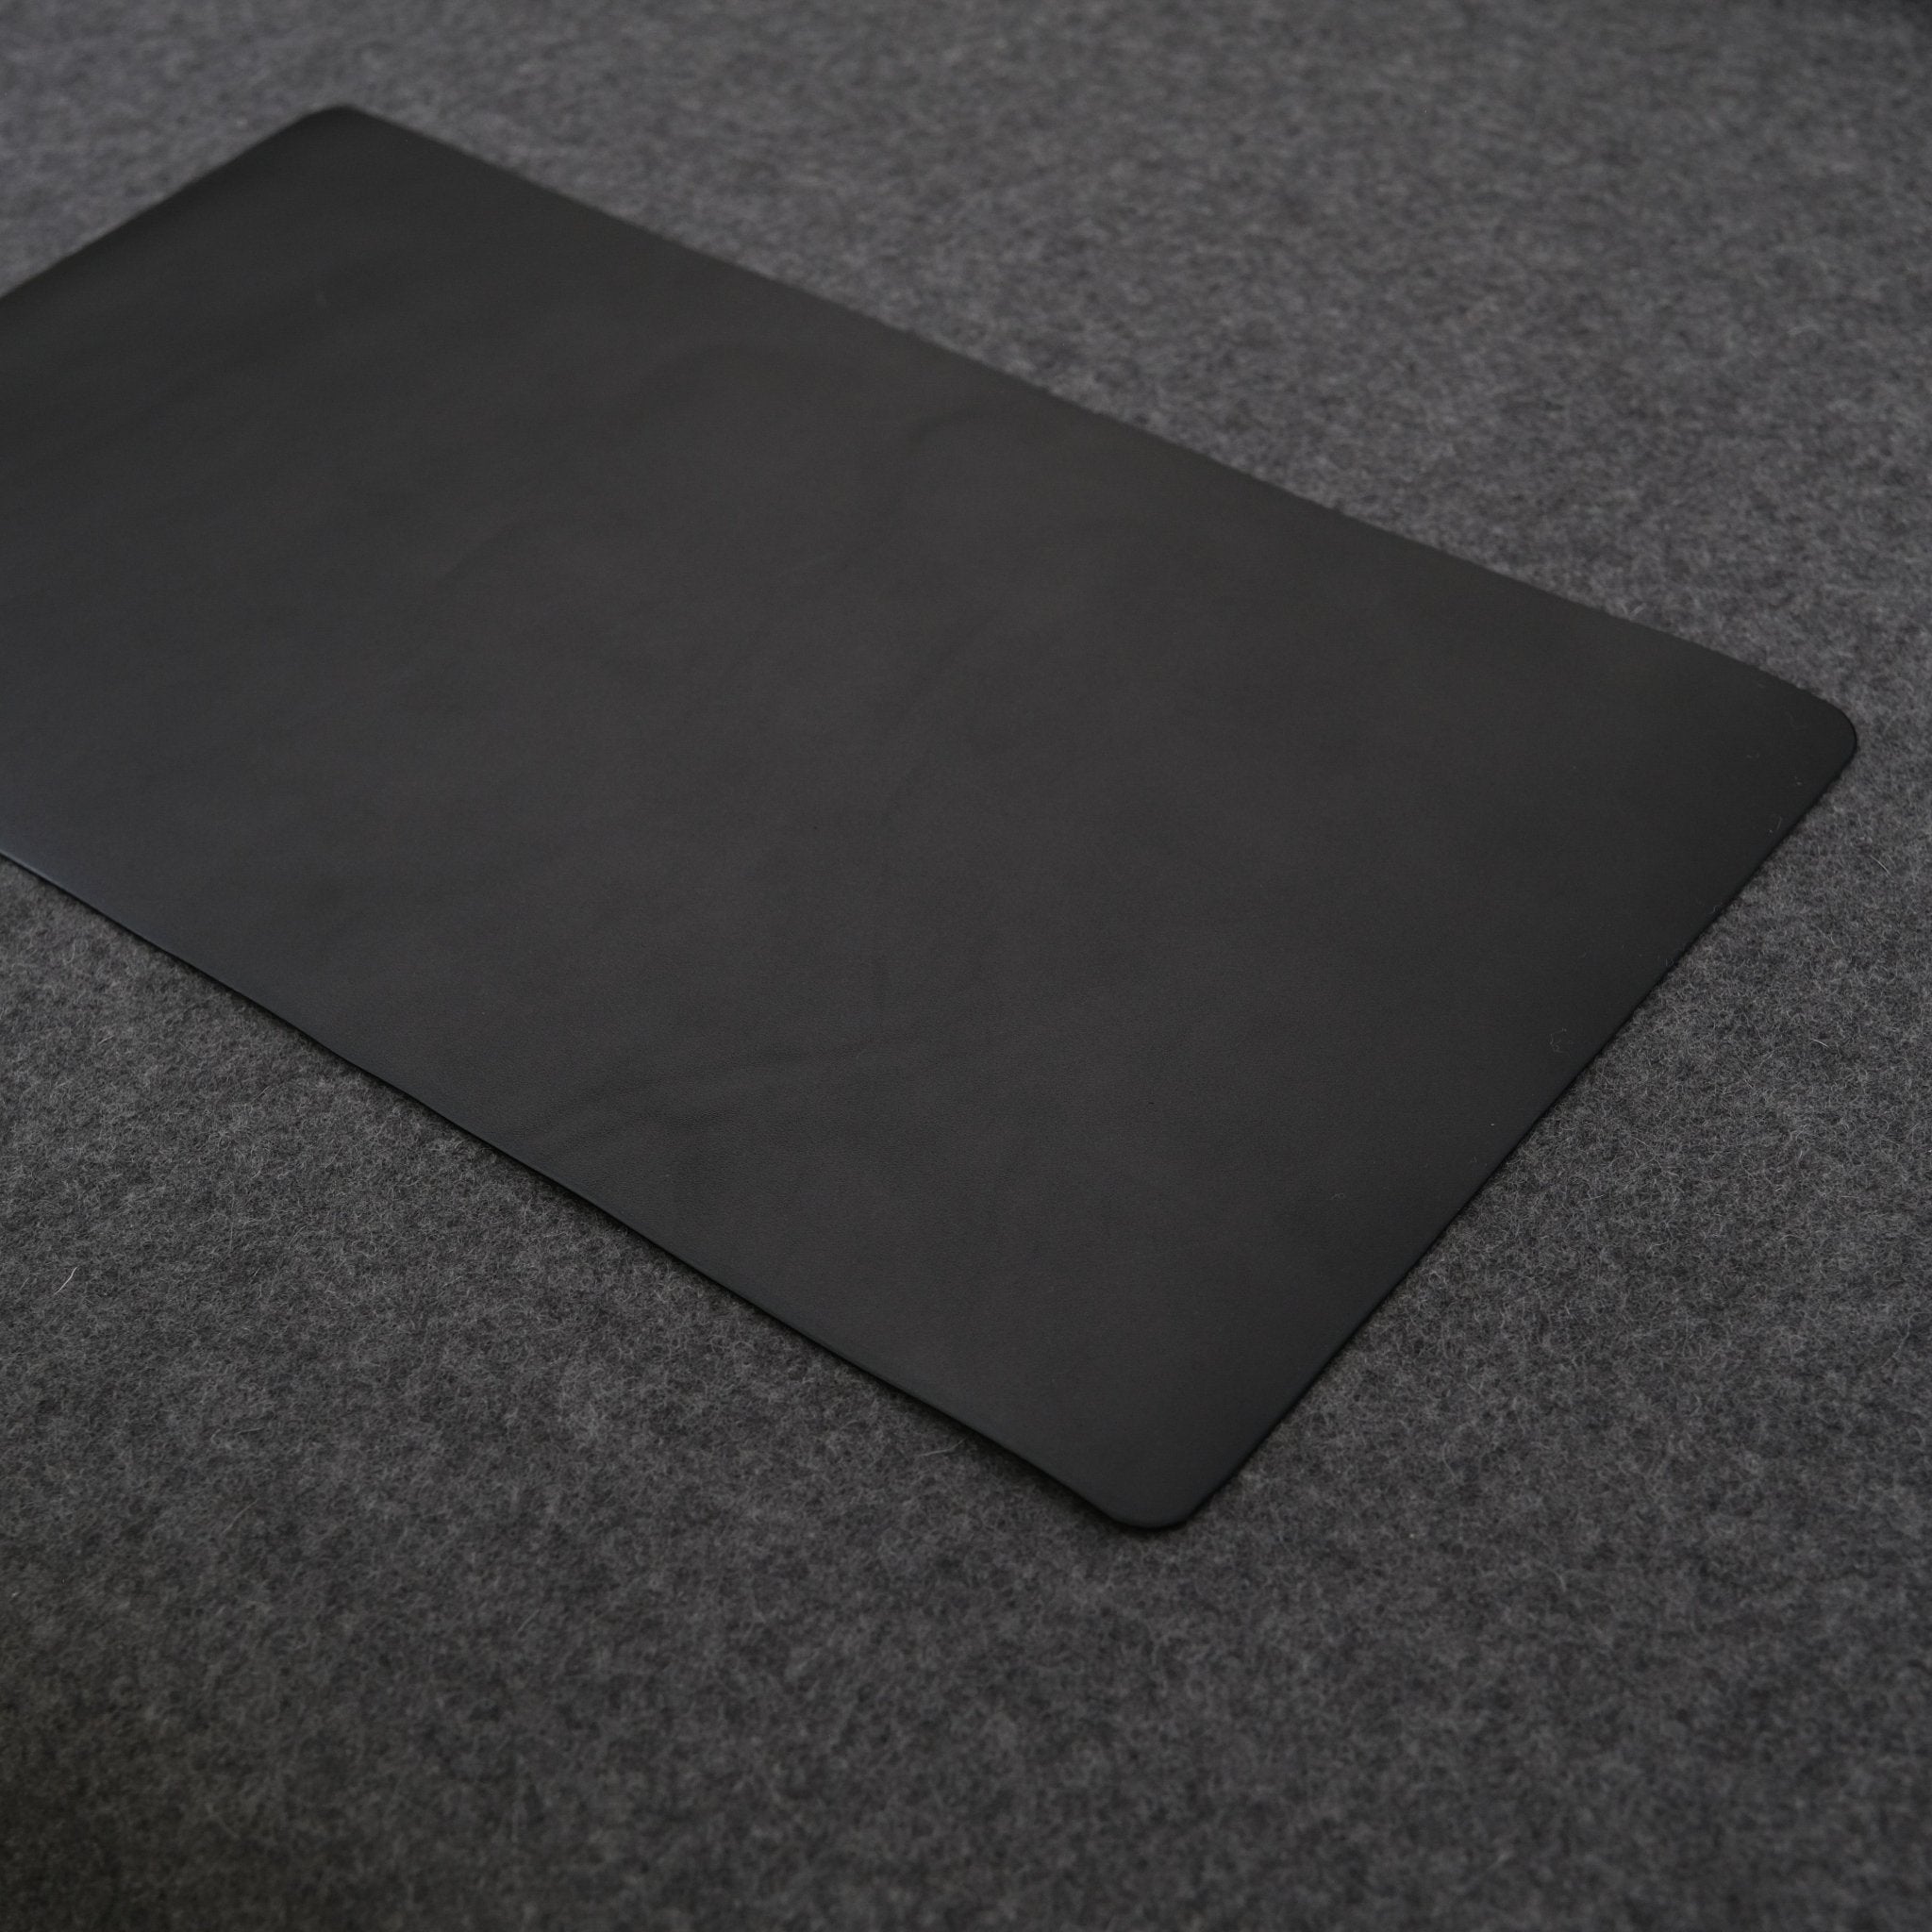 Black Leather Desk Mat